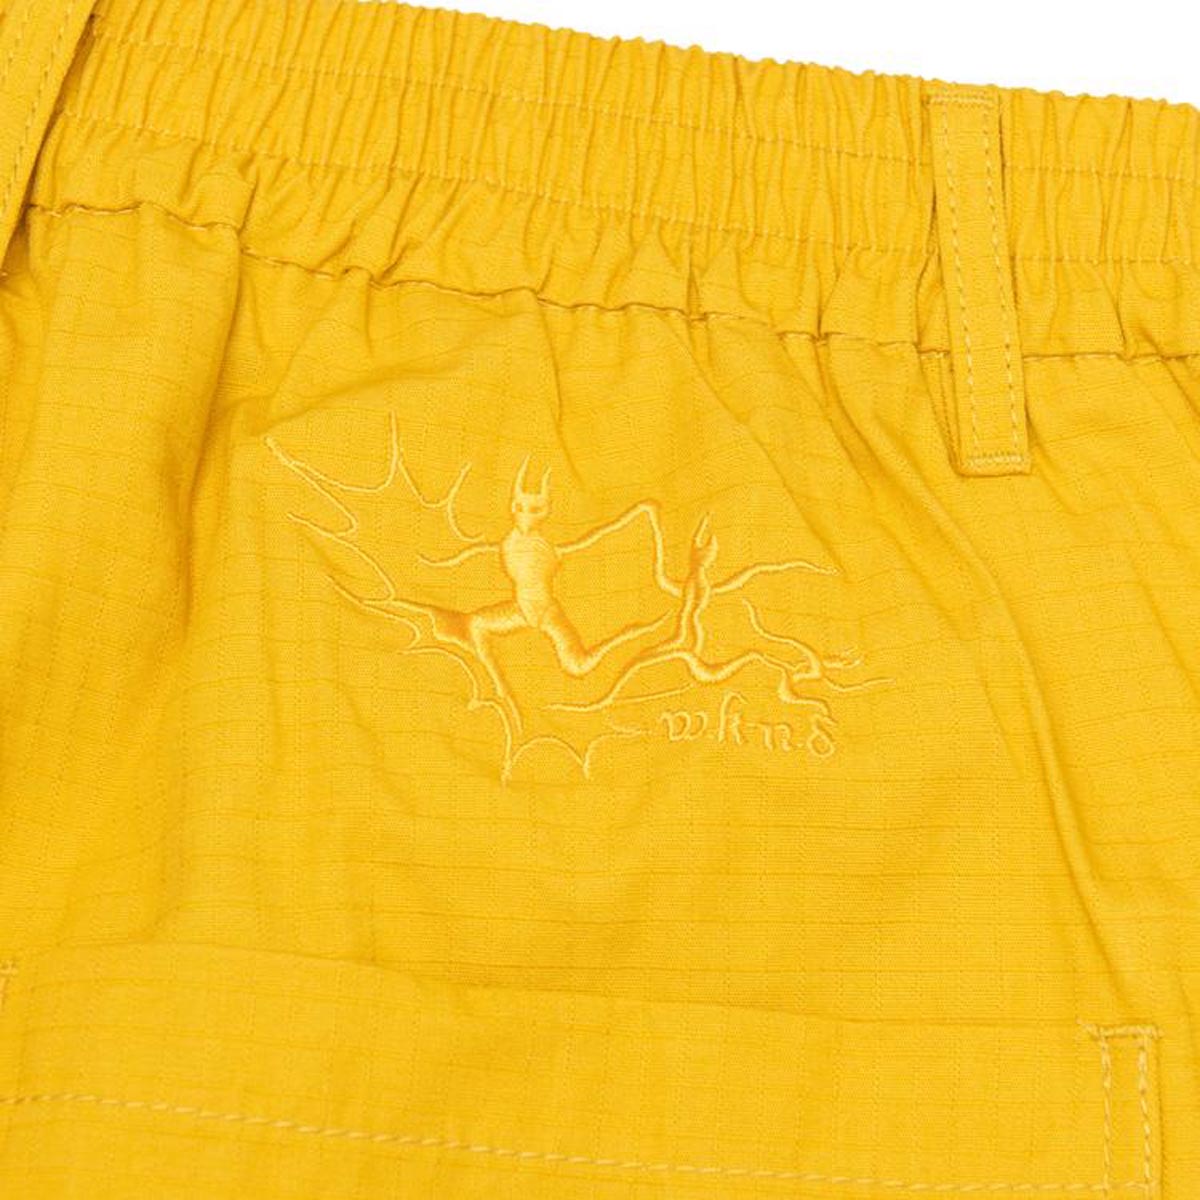 WKND Loosies Pants - Yellow image 3